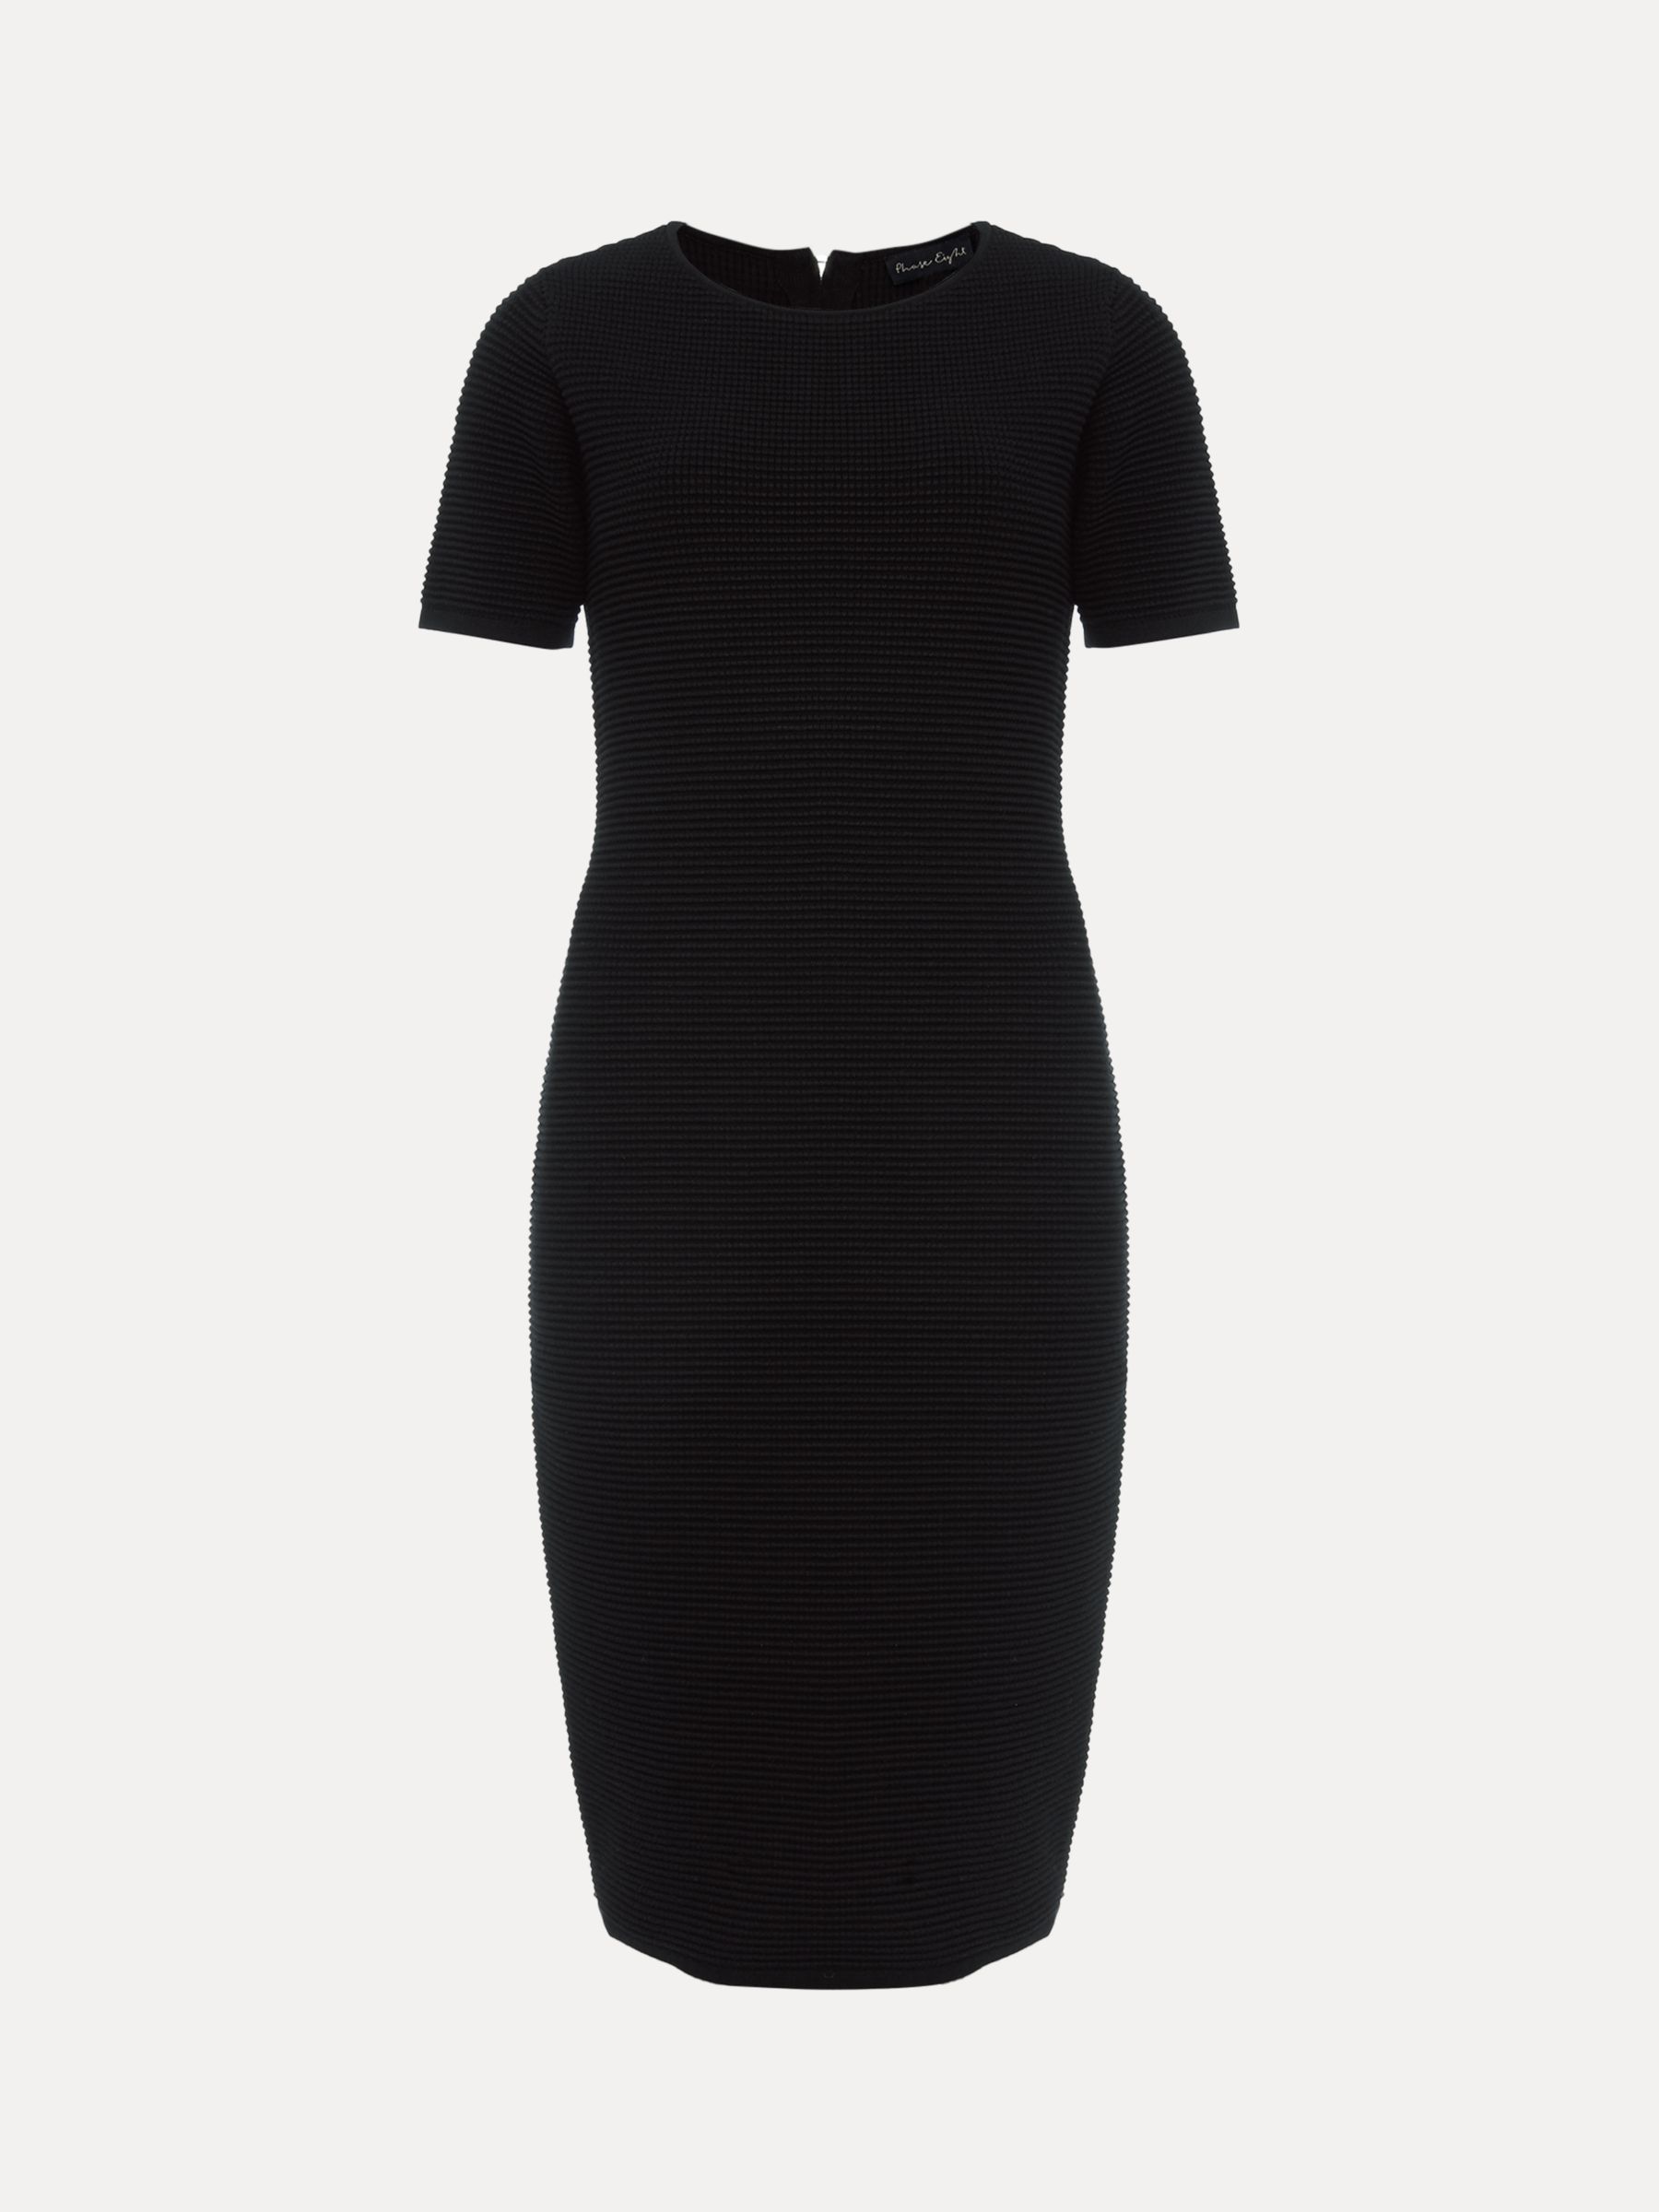 Phase Eight Elsa Ribbed Short Sleeve Dress, Black at John Lewis & Partners